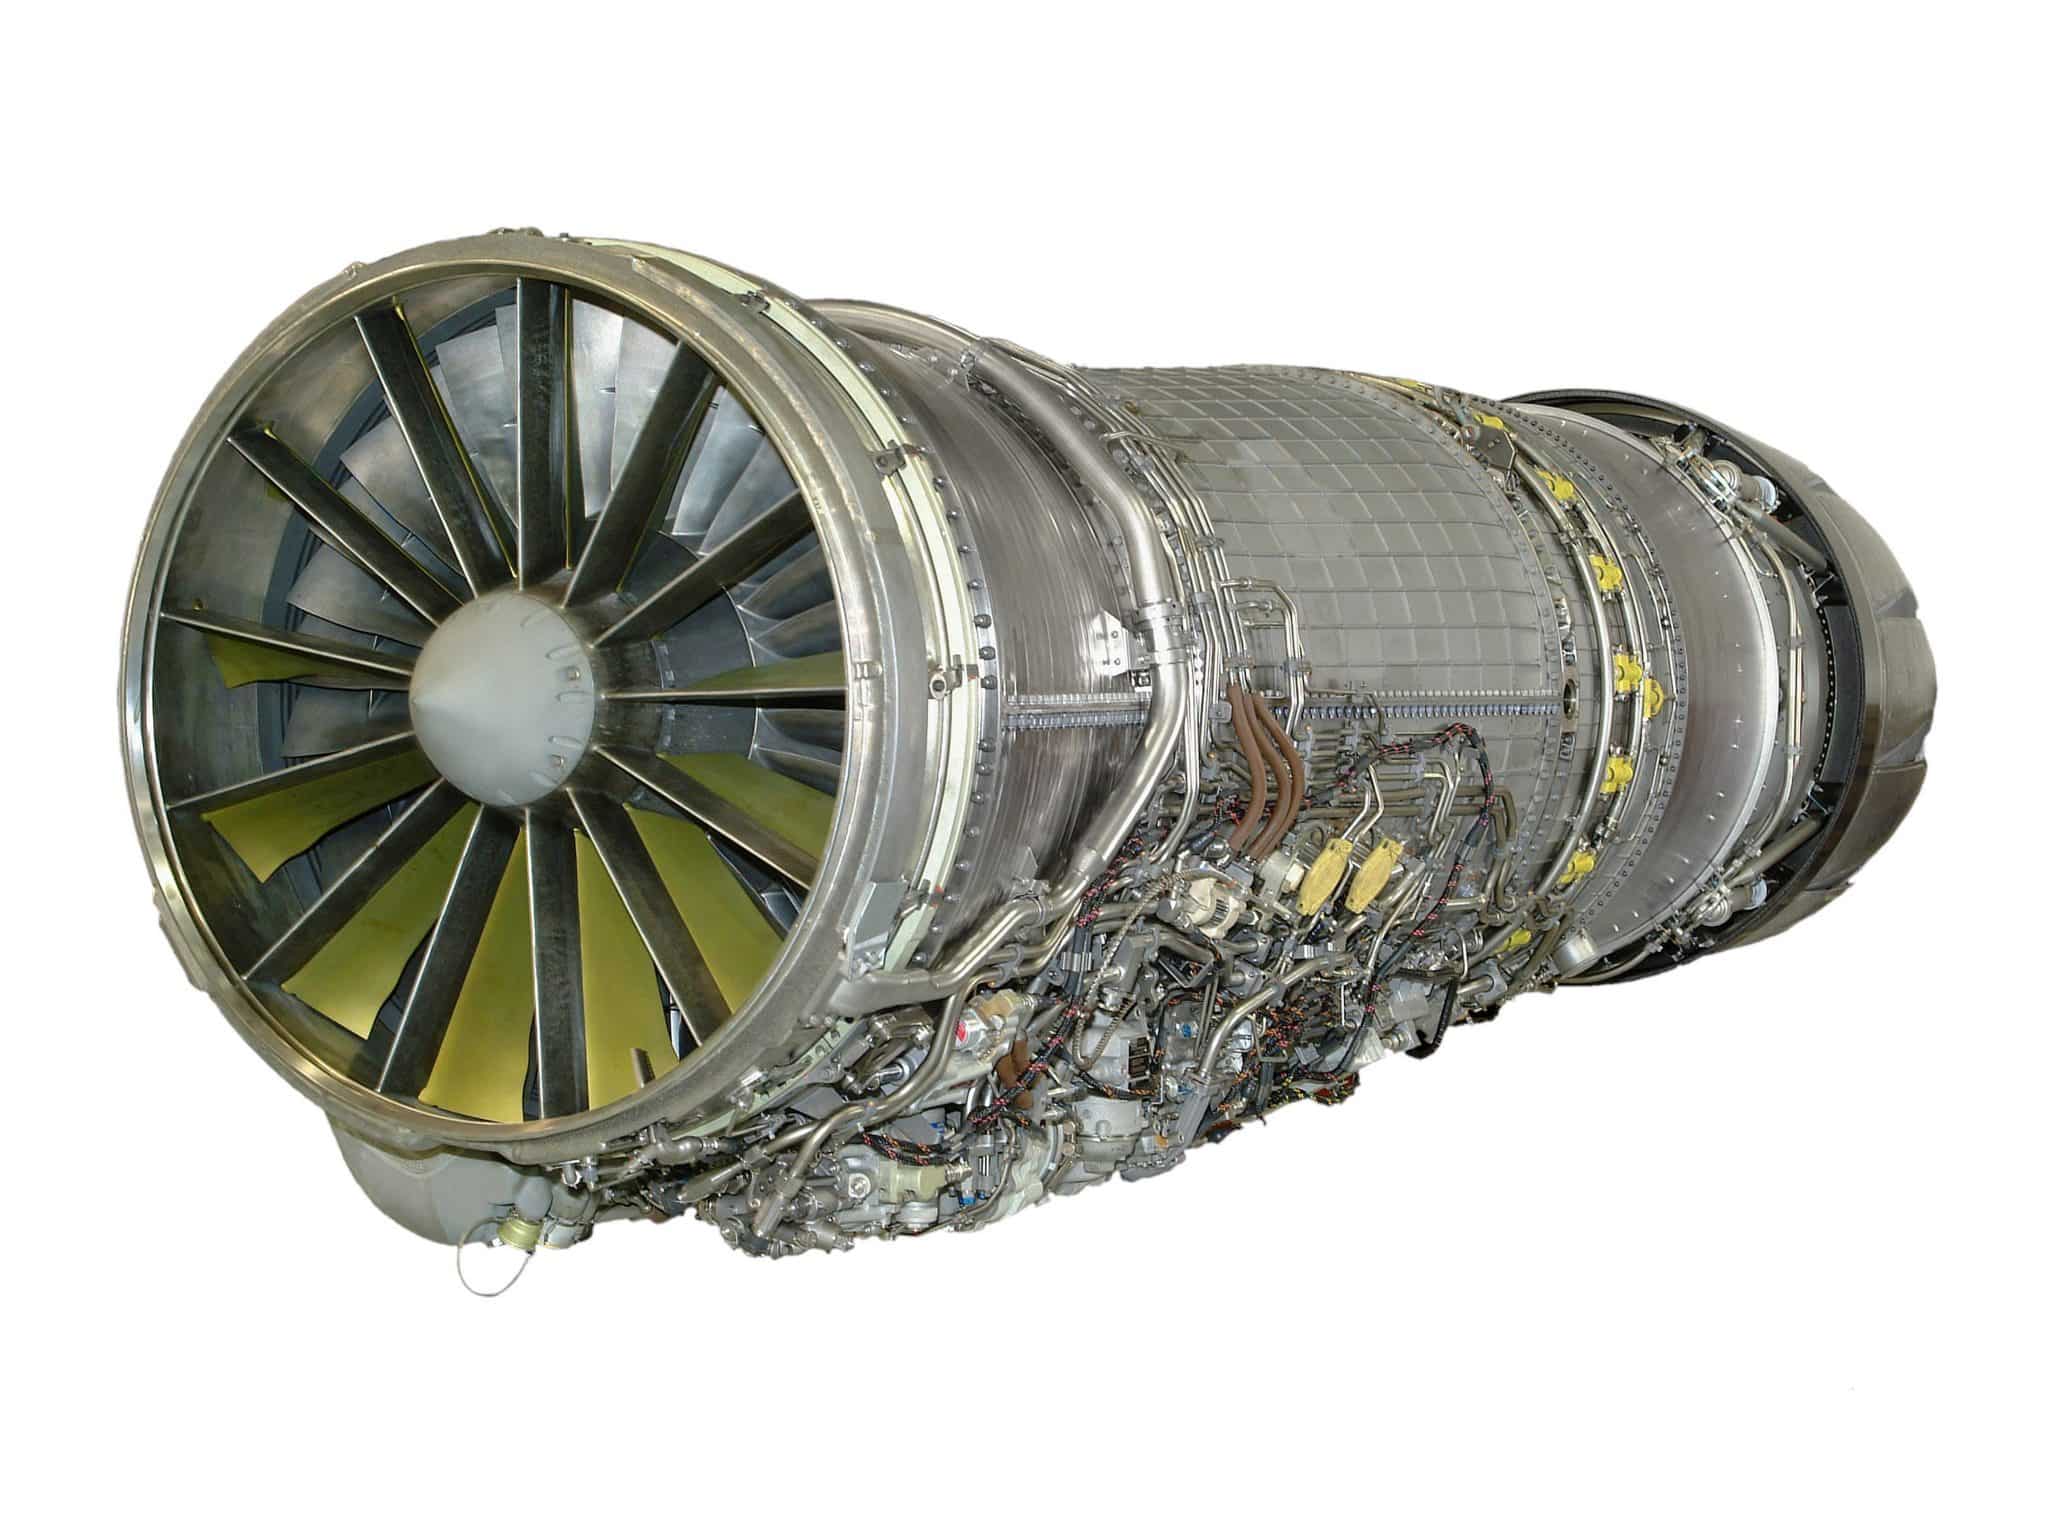 GE Aviation F110 engine